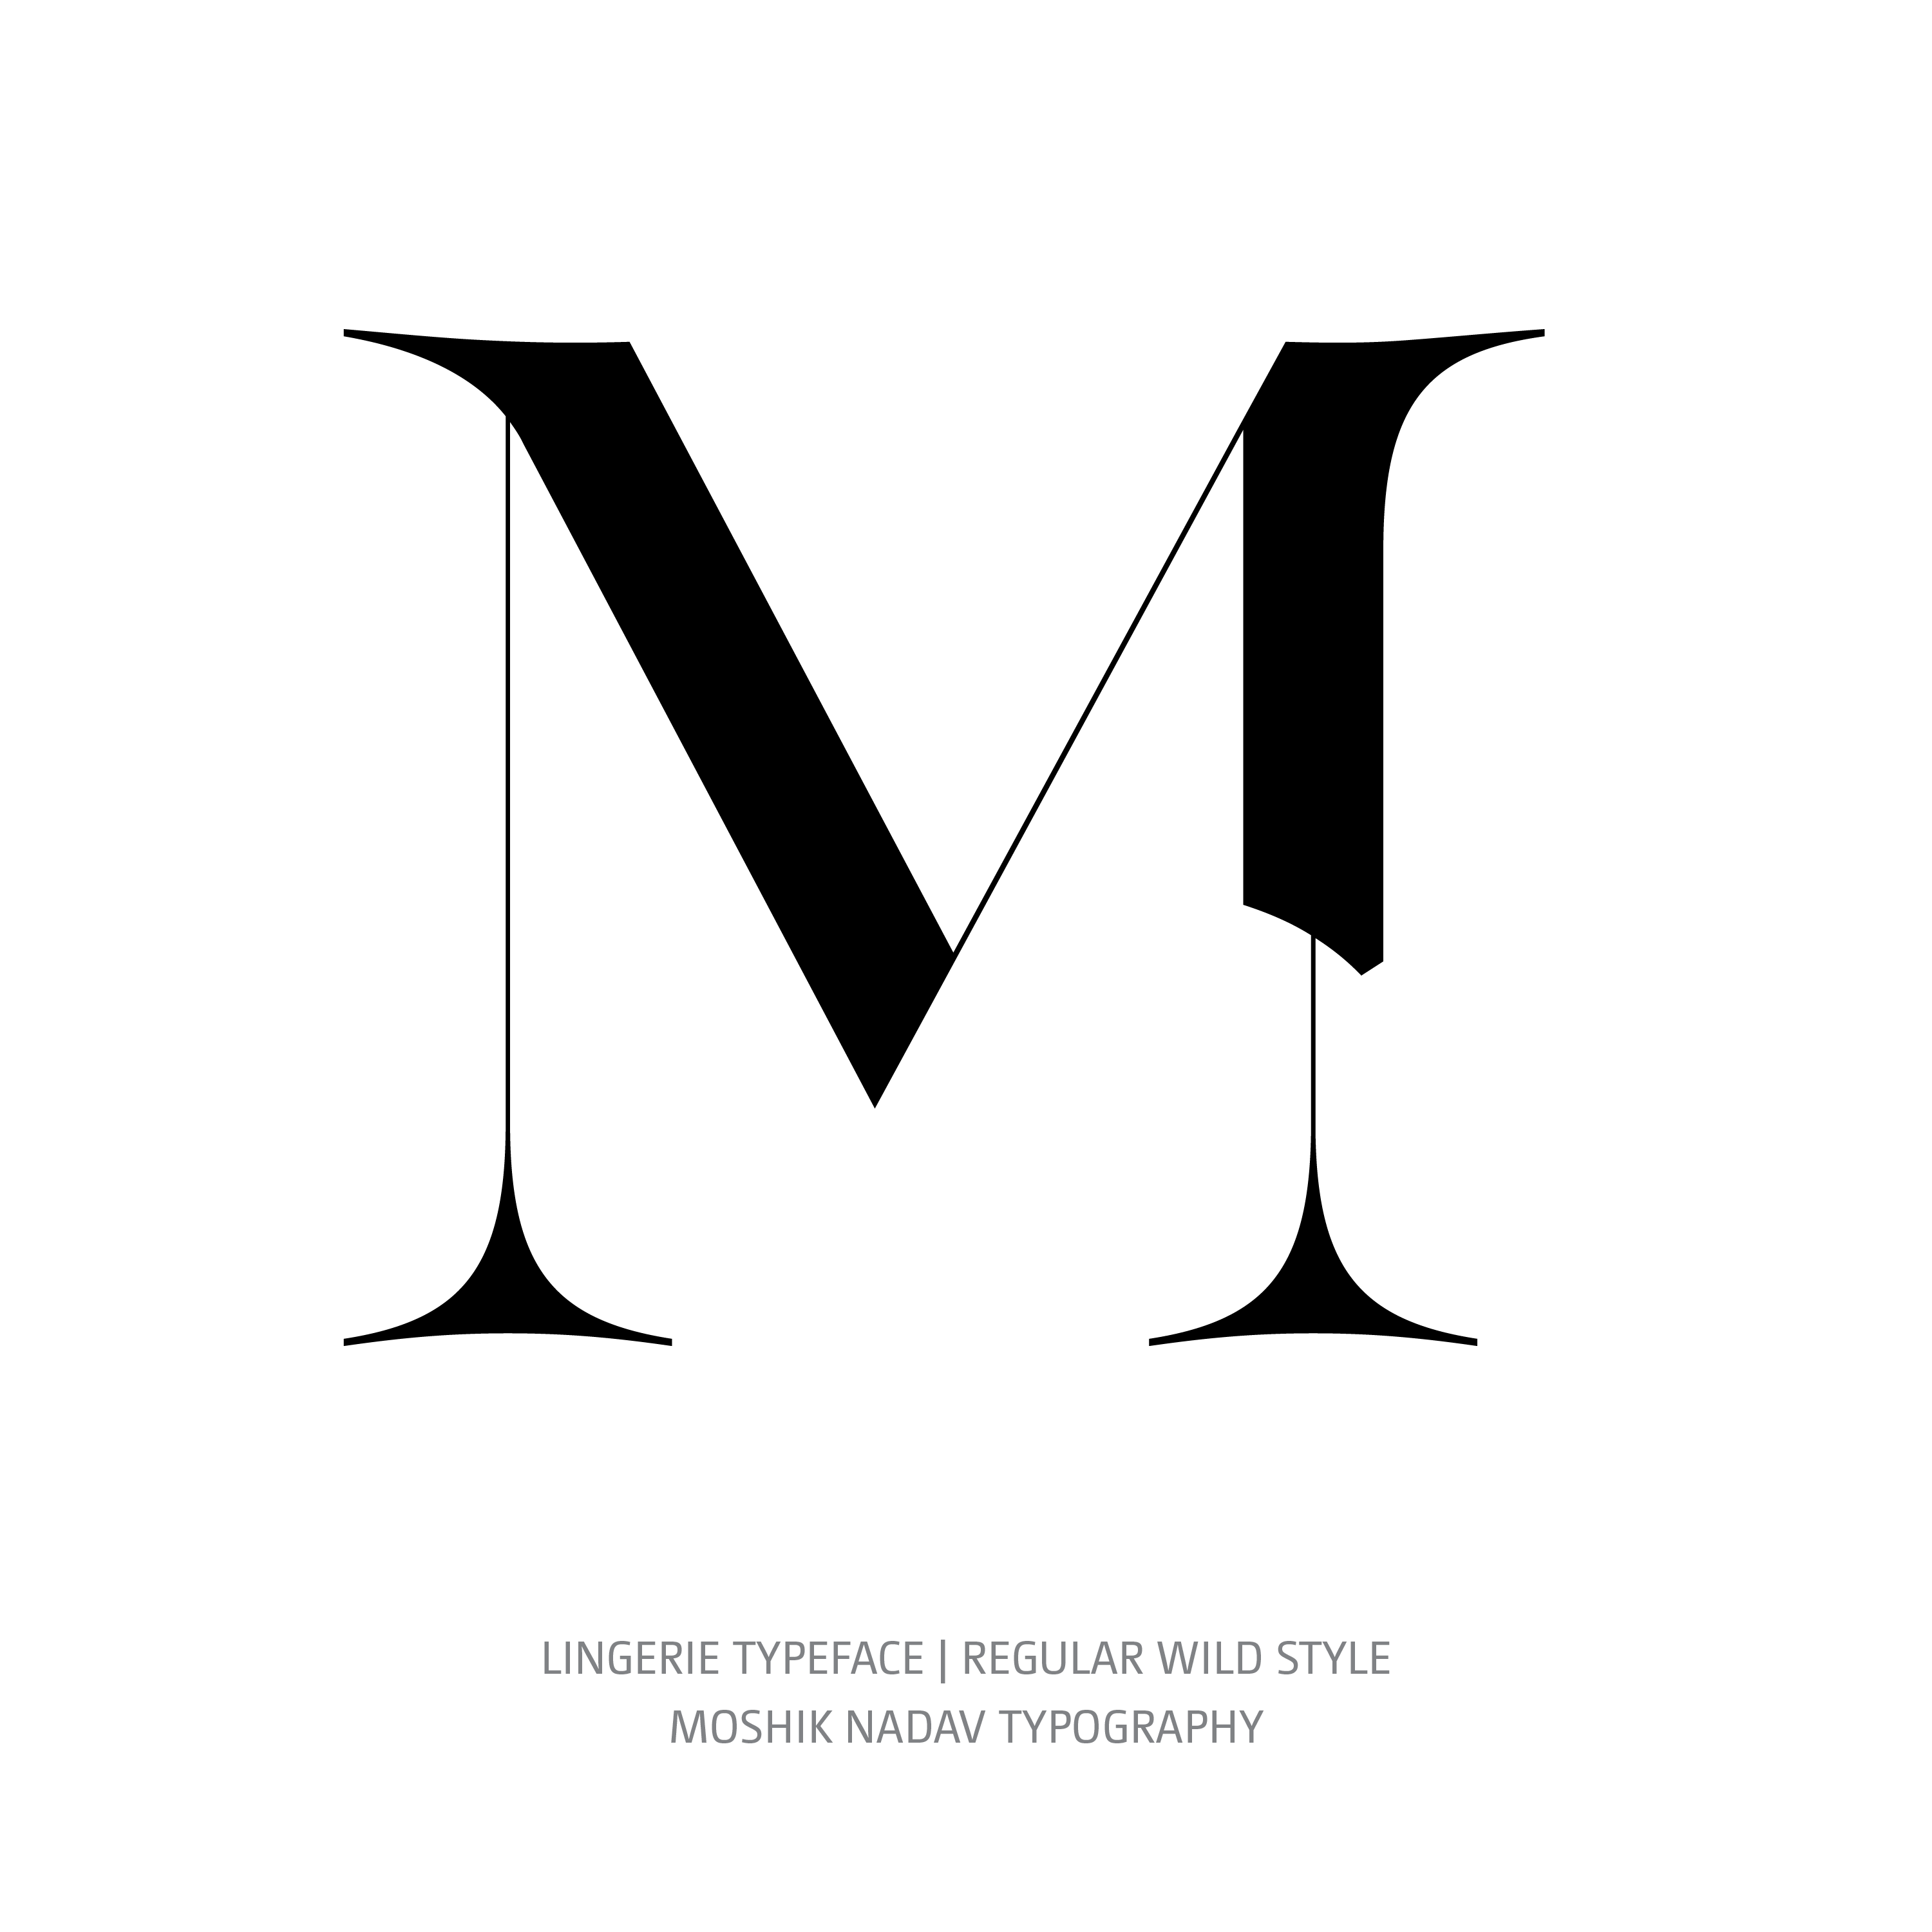 Lingerie Typeface Regular Wild M